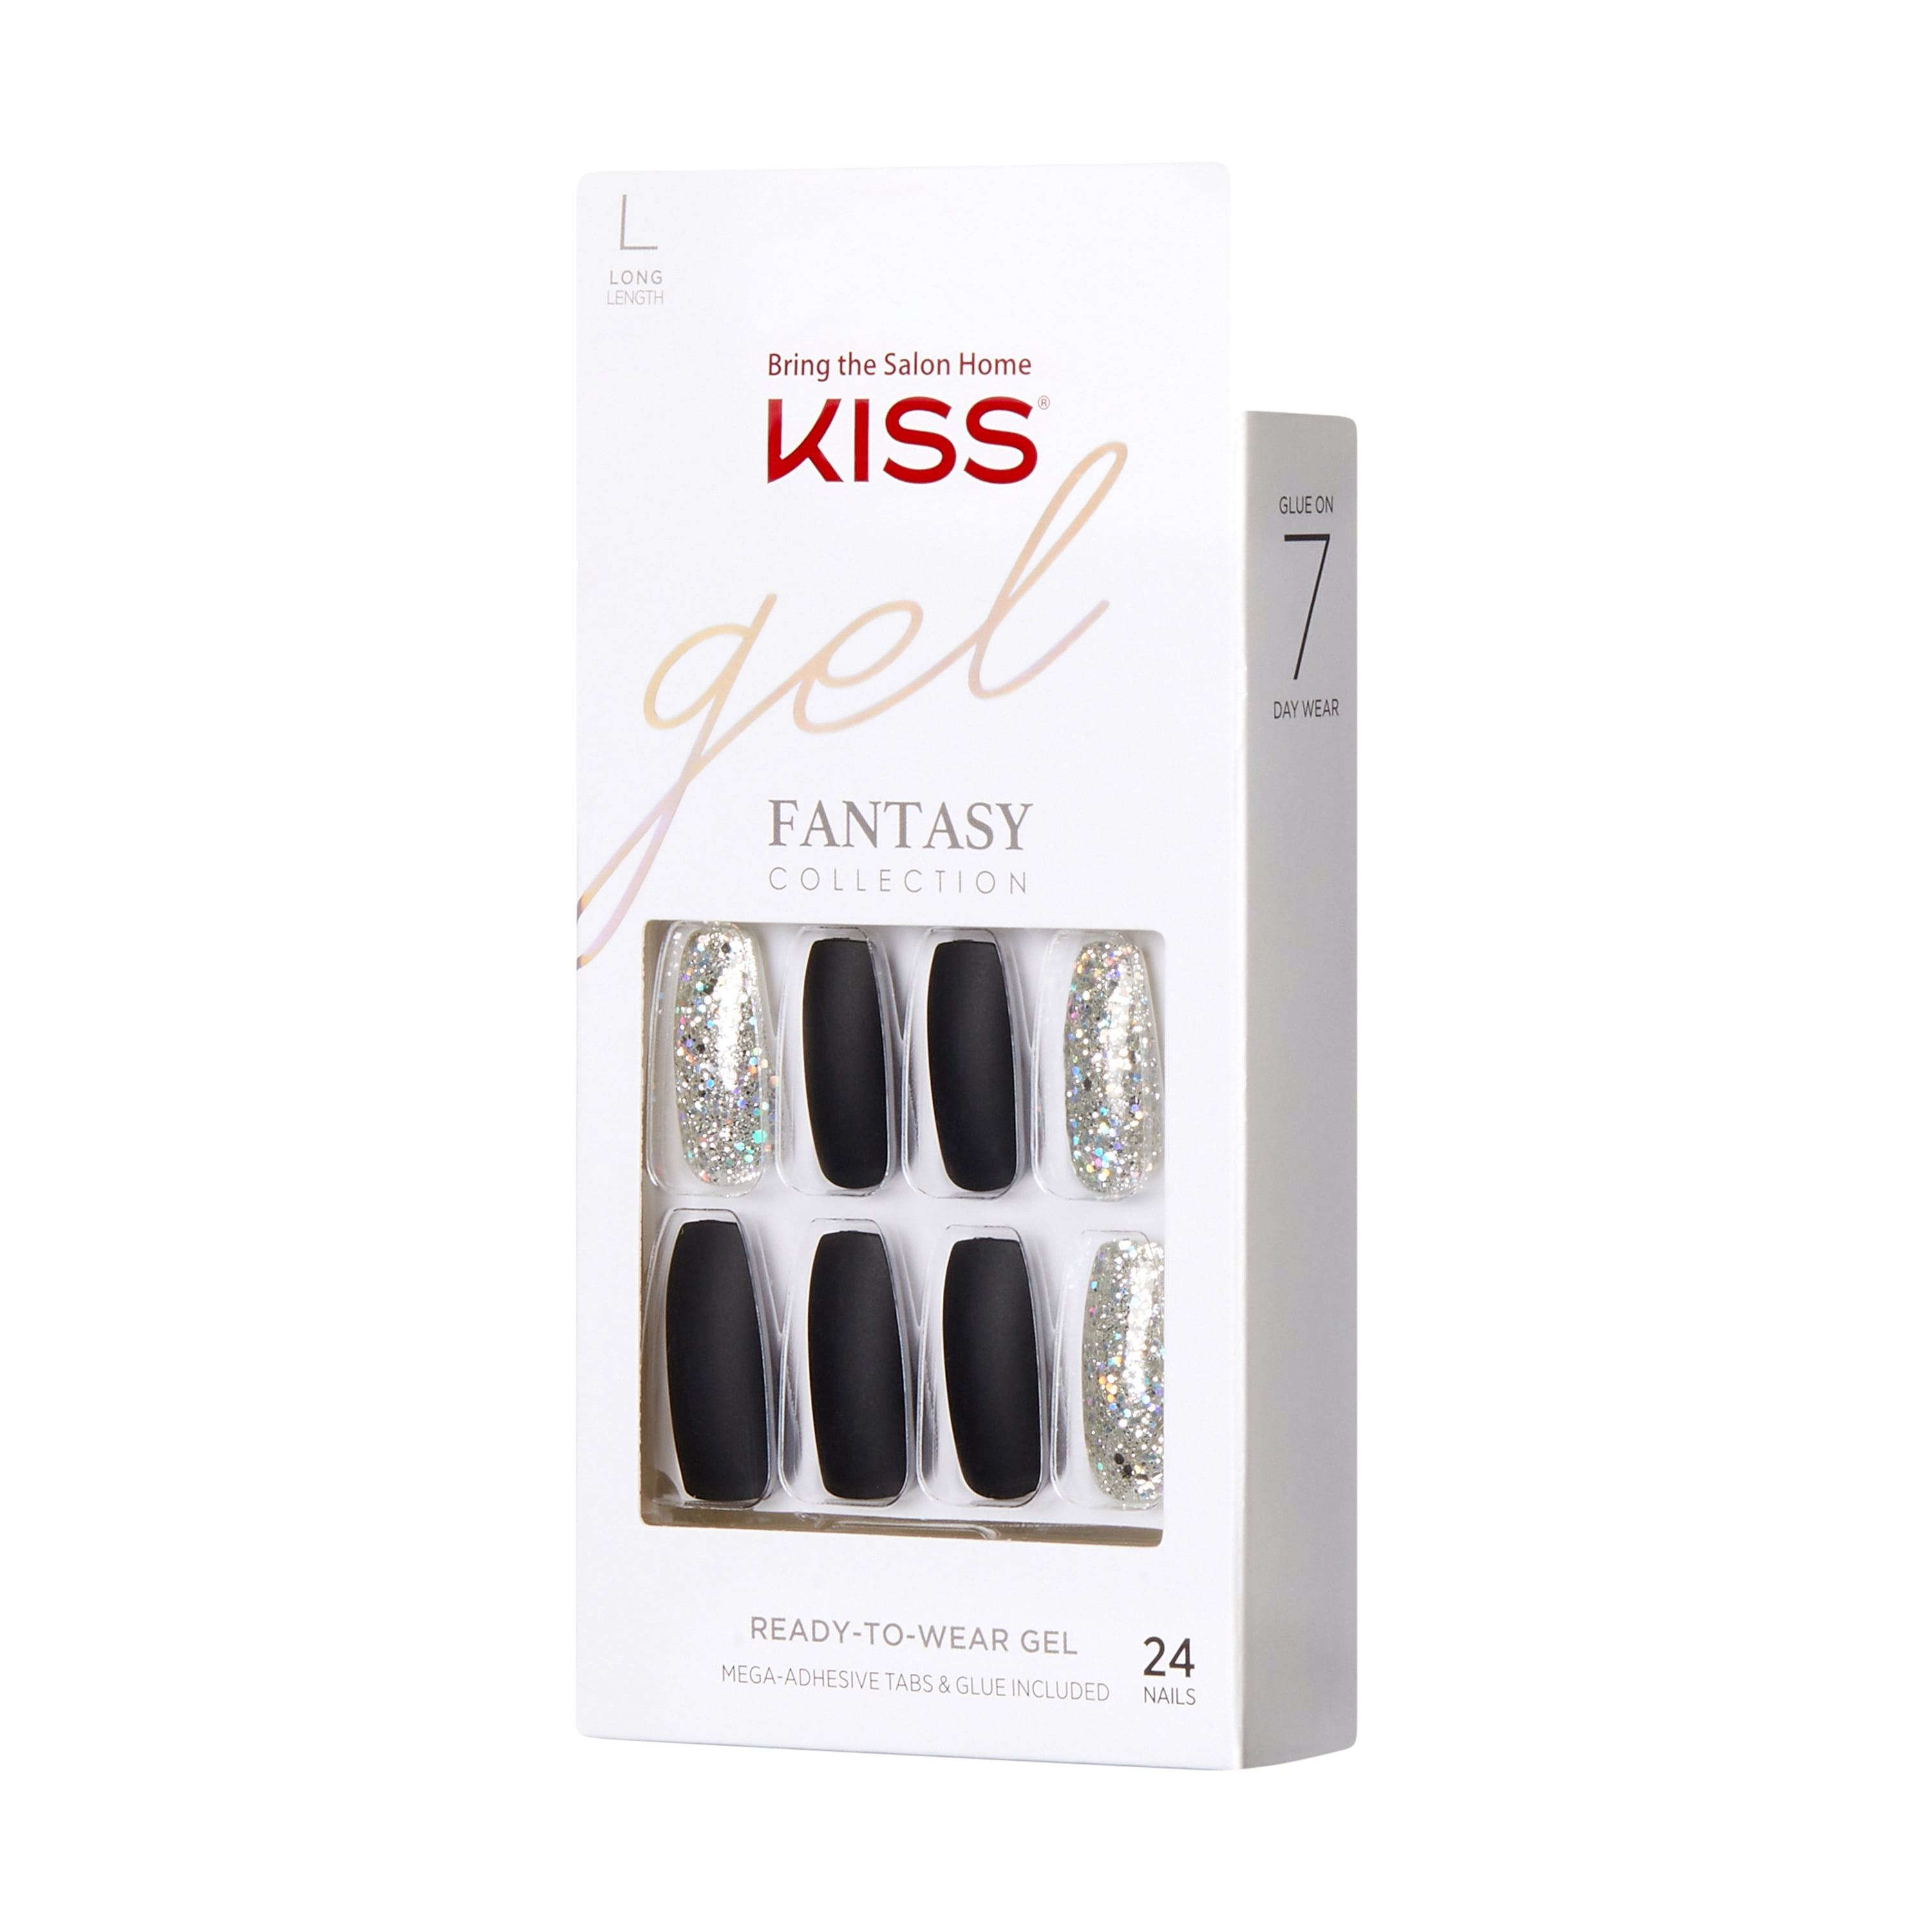 KISS USA Fantasy Ready-to-Wear Gel Nails, Medium - Walmart.com